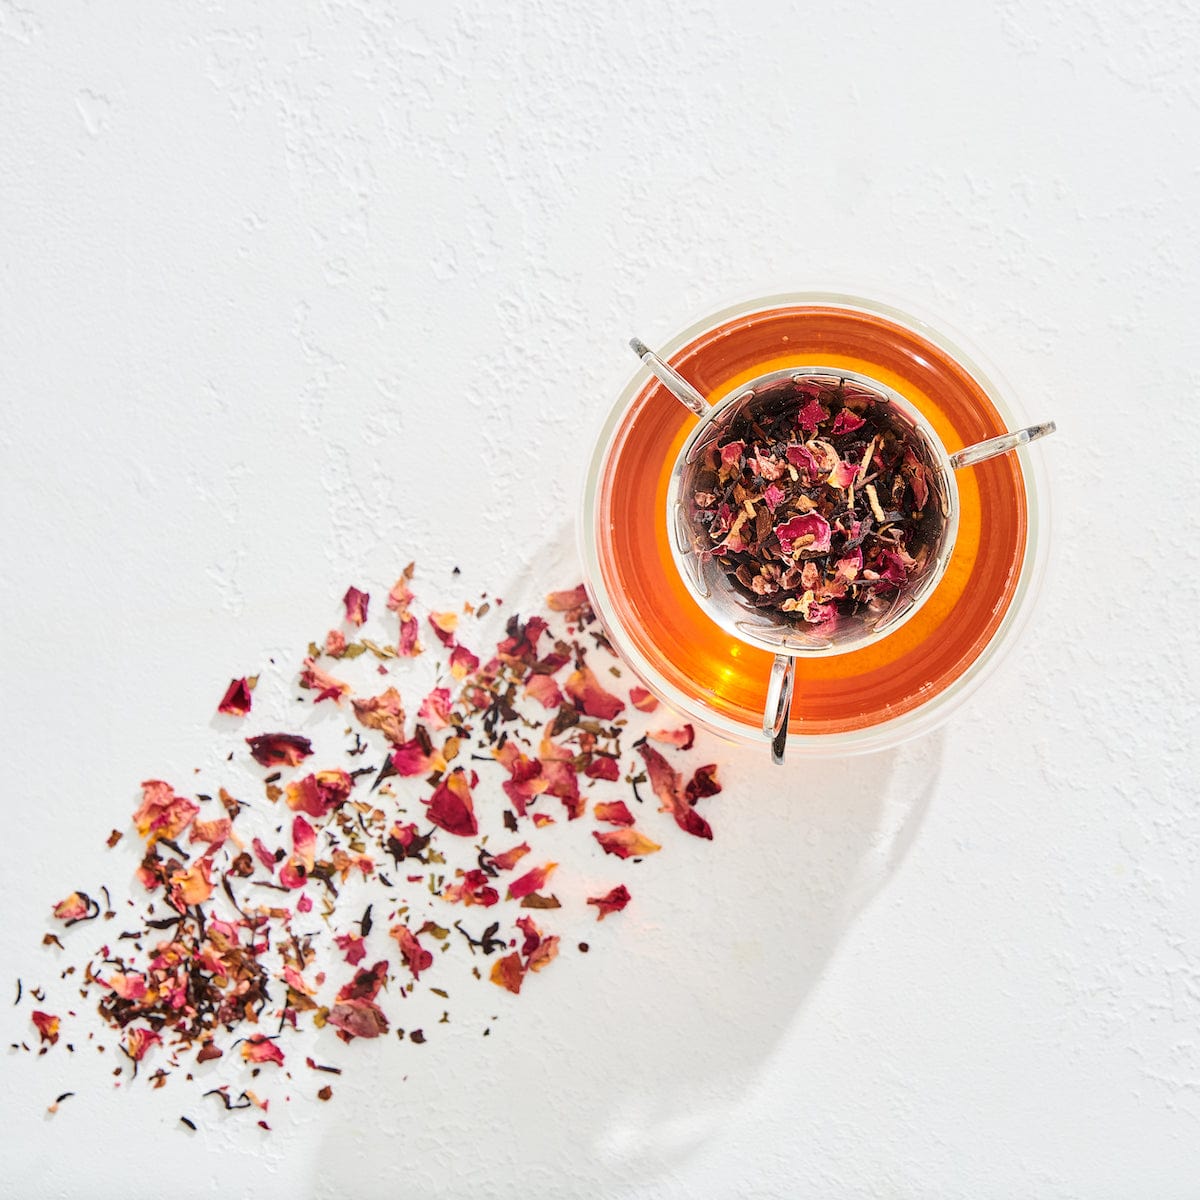 Taurus: Tea of Venusian Garden Delights Luxe Pouch